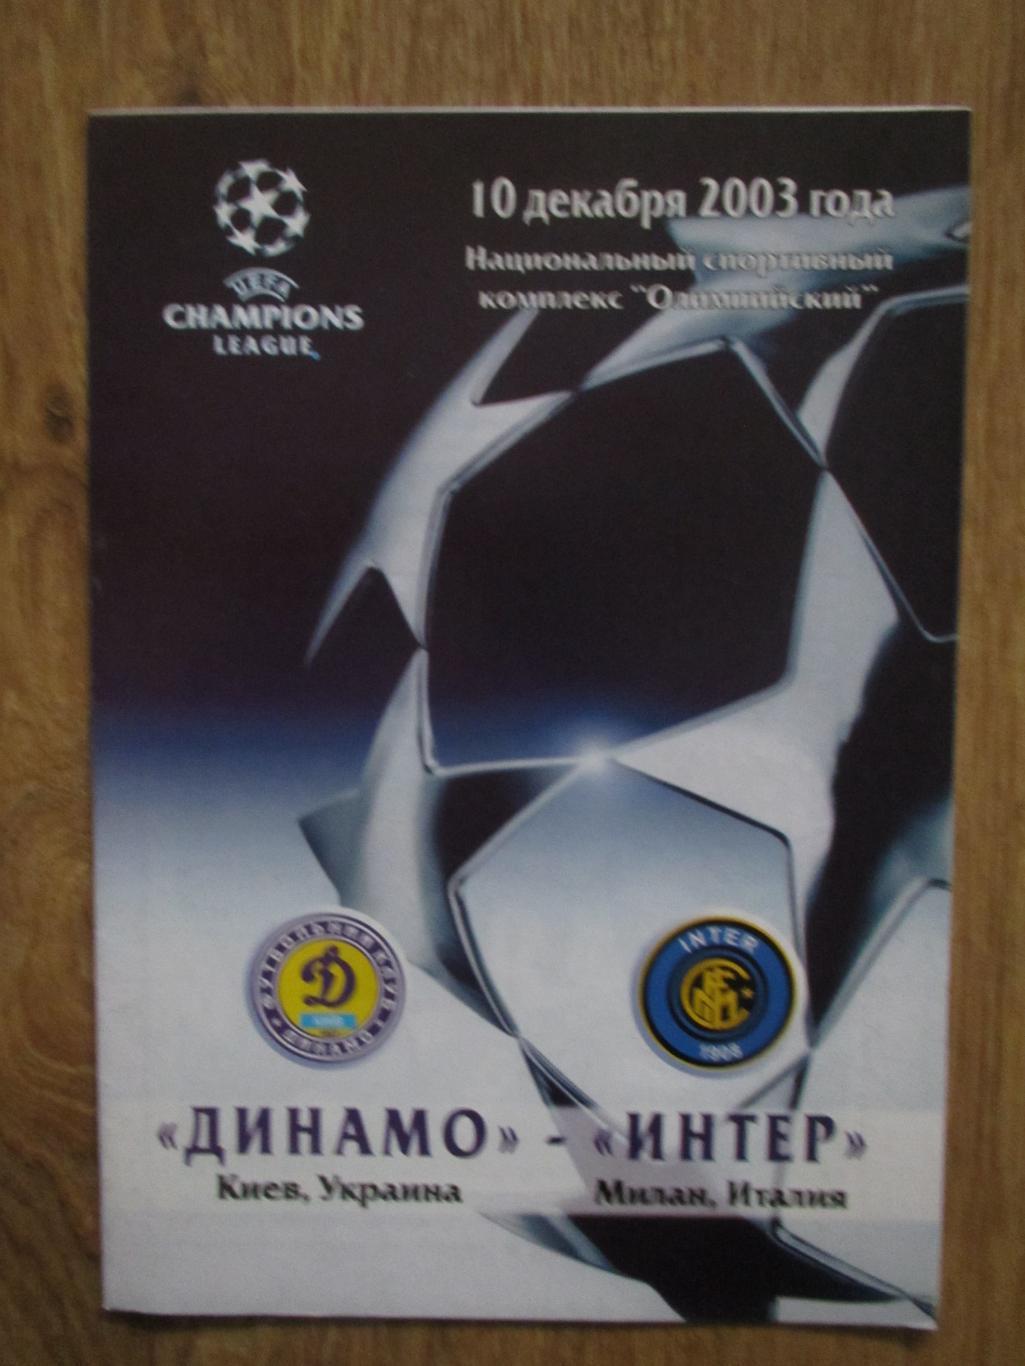 Динамо Киев-Интер Милан 10.12.2003